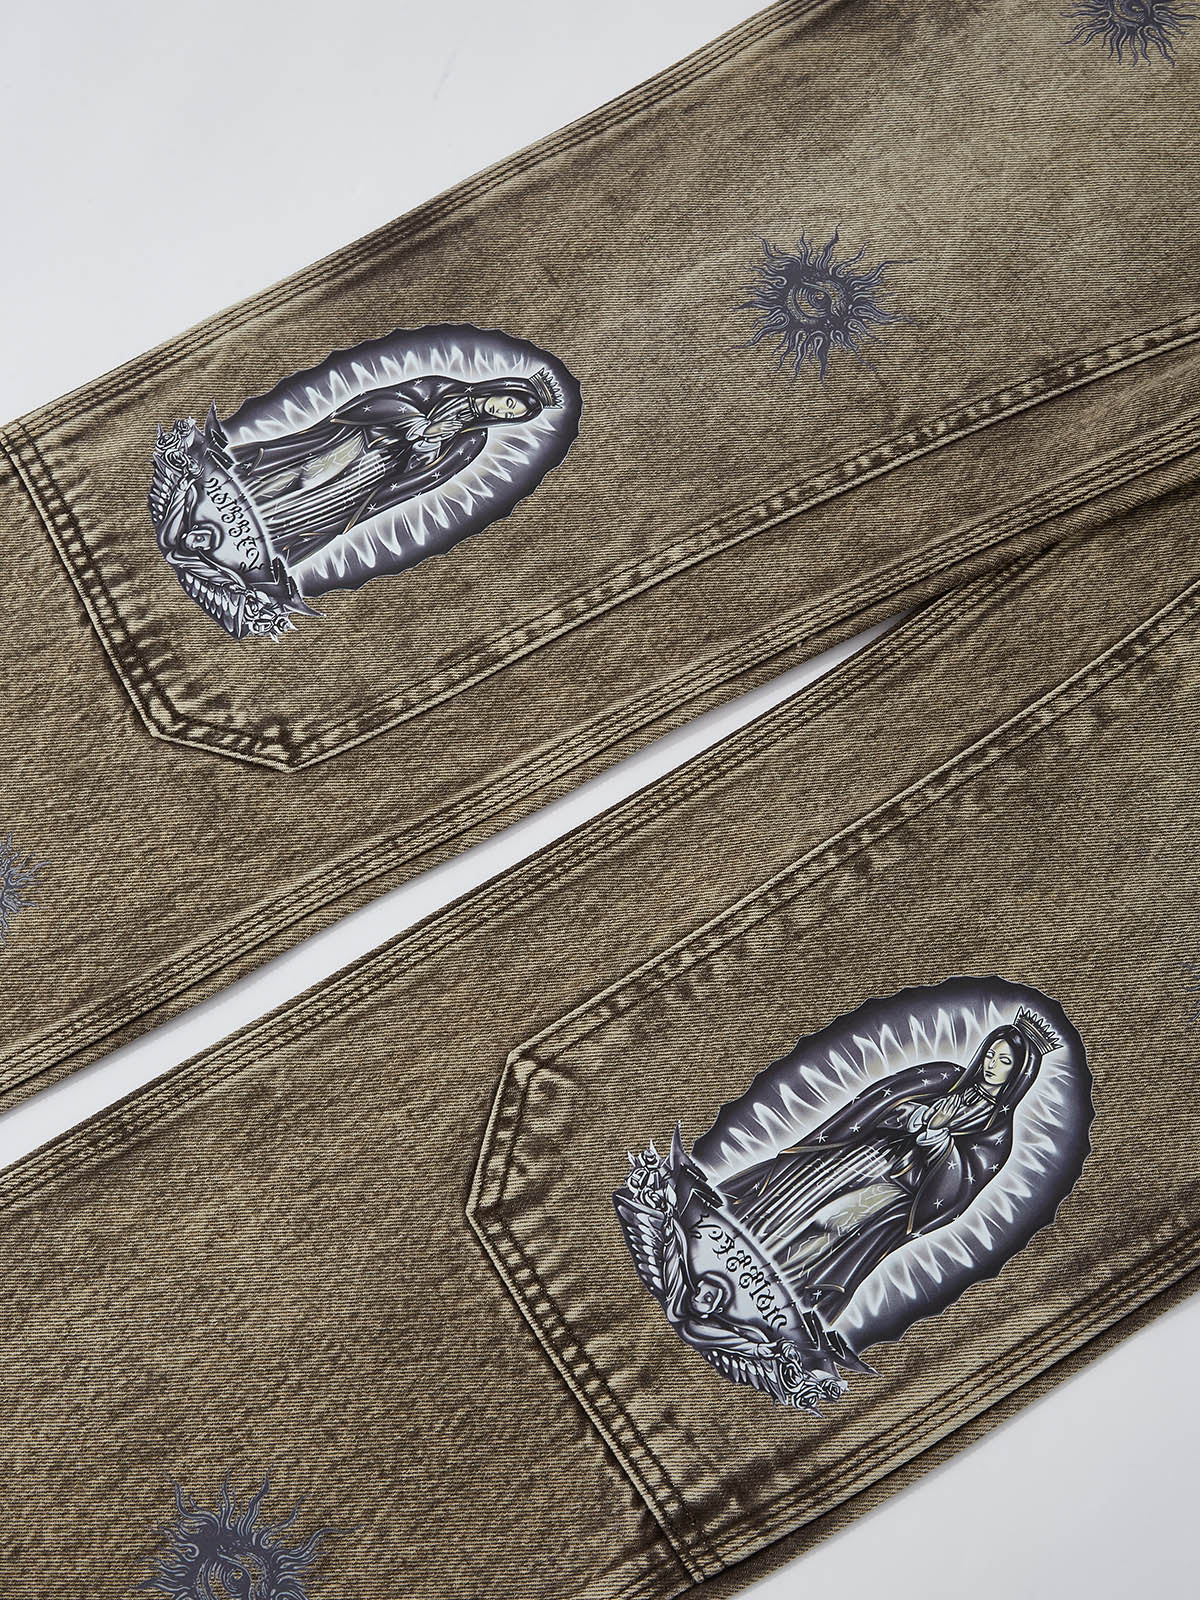 HINDERNISSE &amp; GEFAHREN© Unsere Guadalupe Vintage Distressed Stacked Jeans